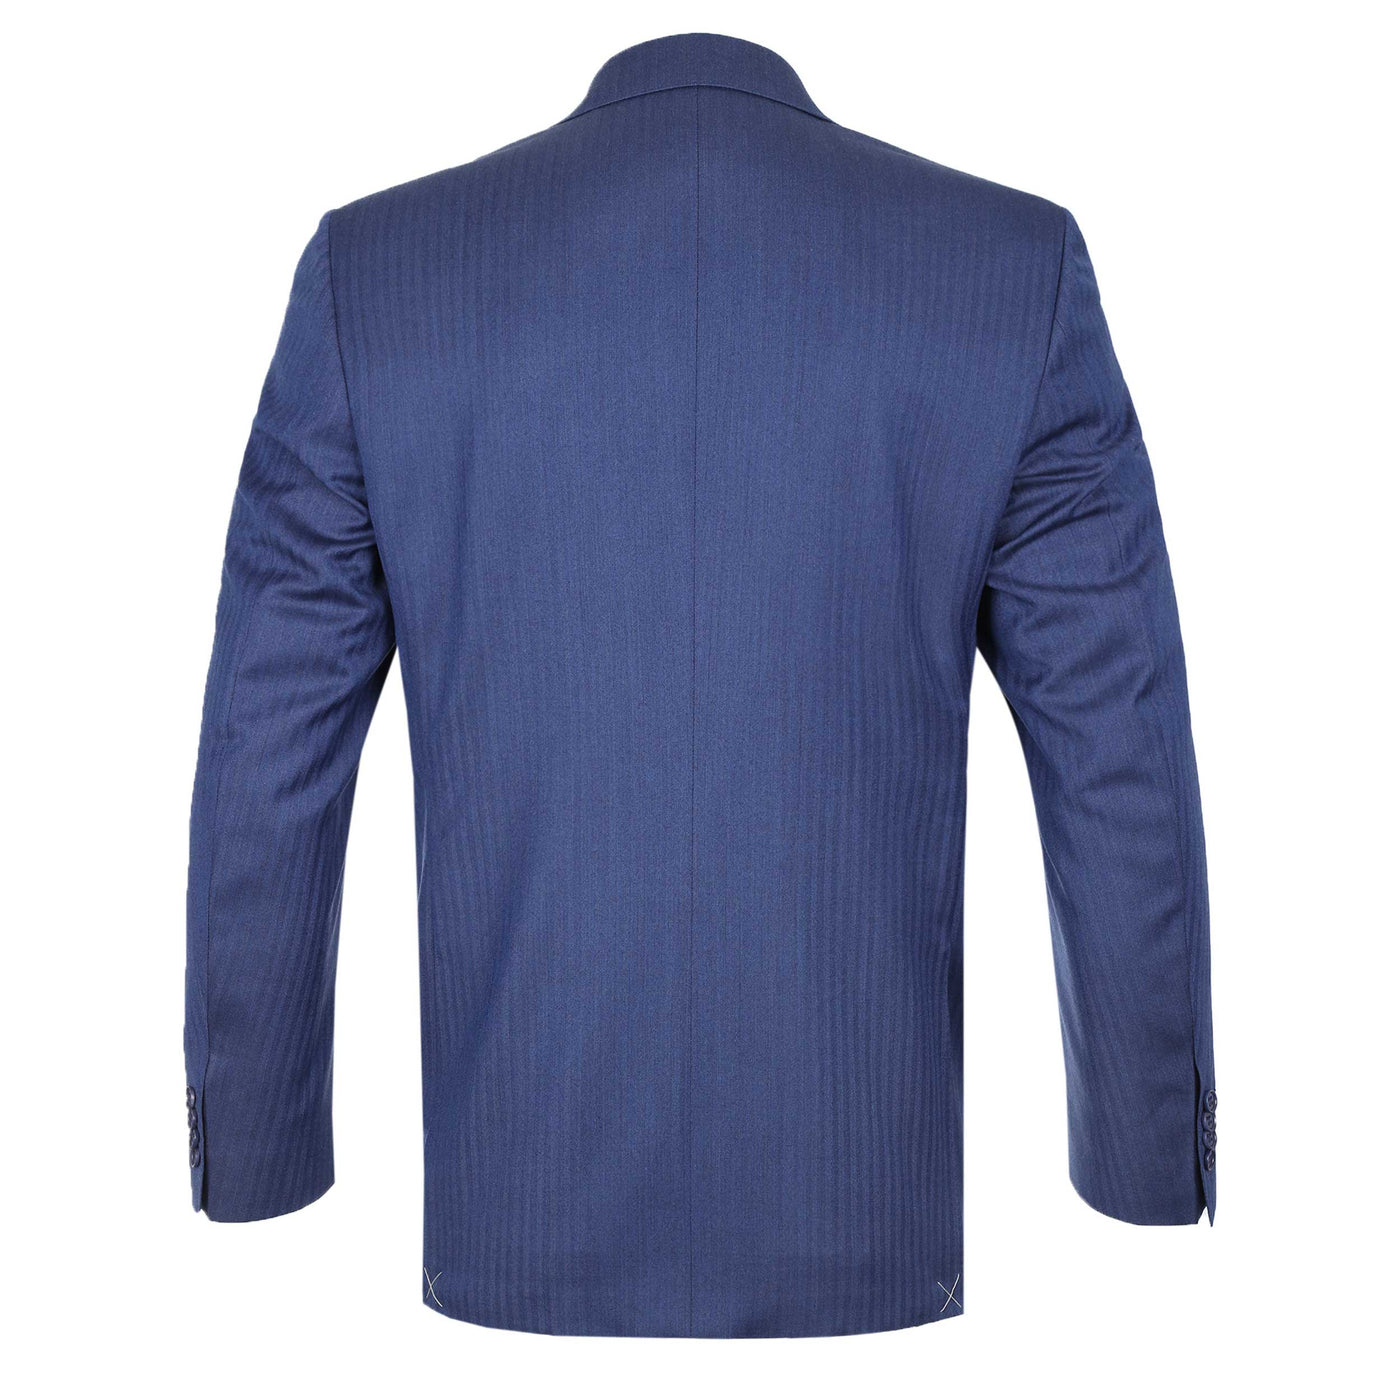 Canali Herringbone Notch Lapel Suit in Mid Blue Back